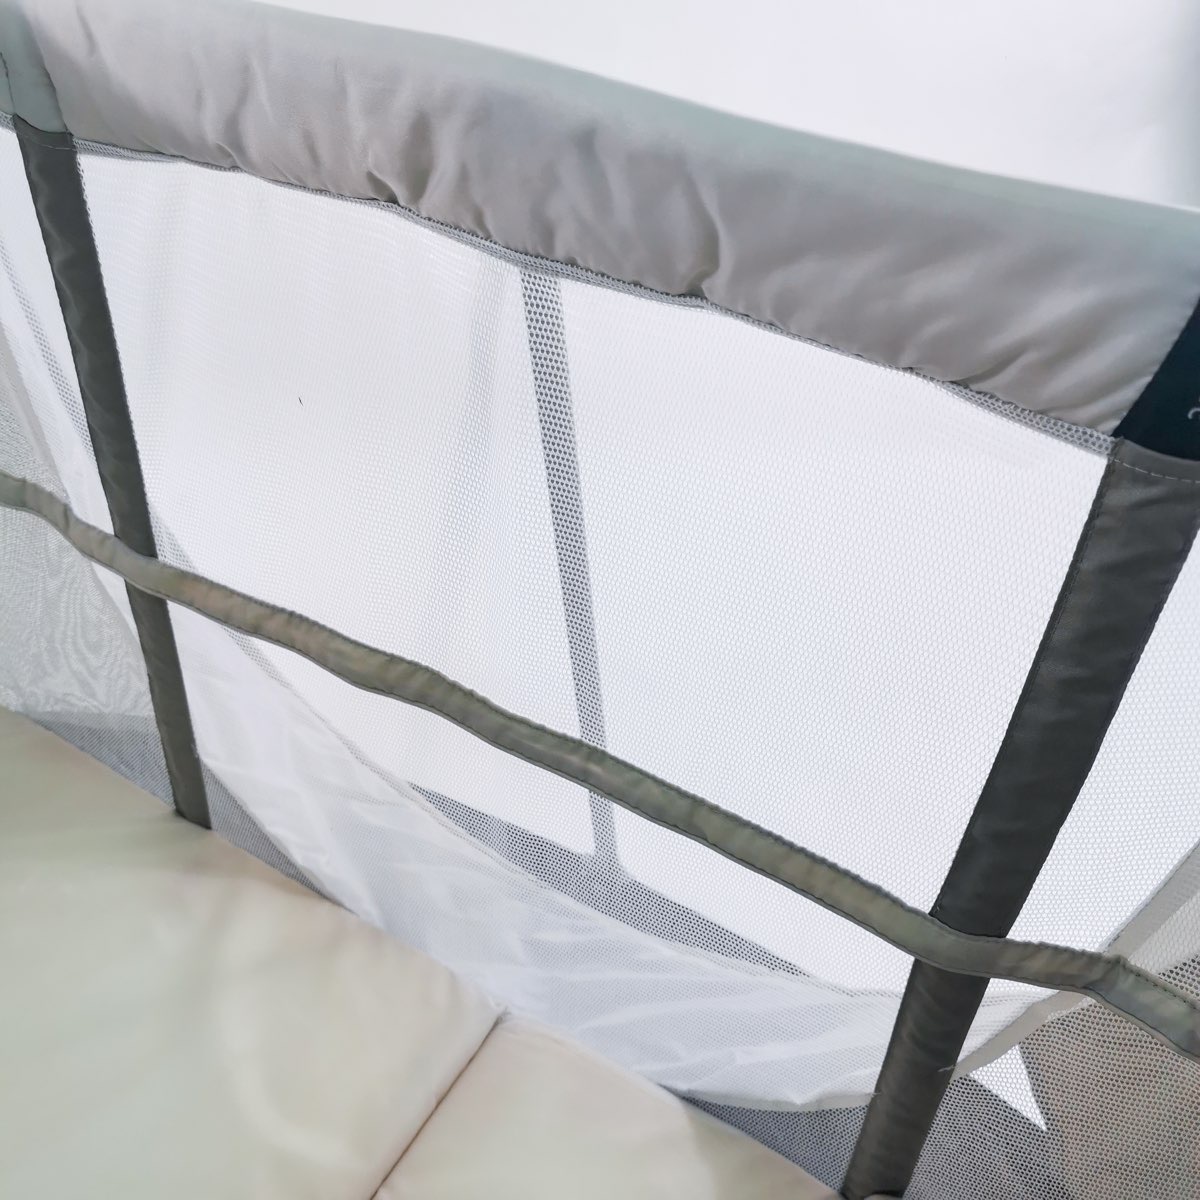 AeroMoov Instant Travel Crib เตียงนอน